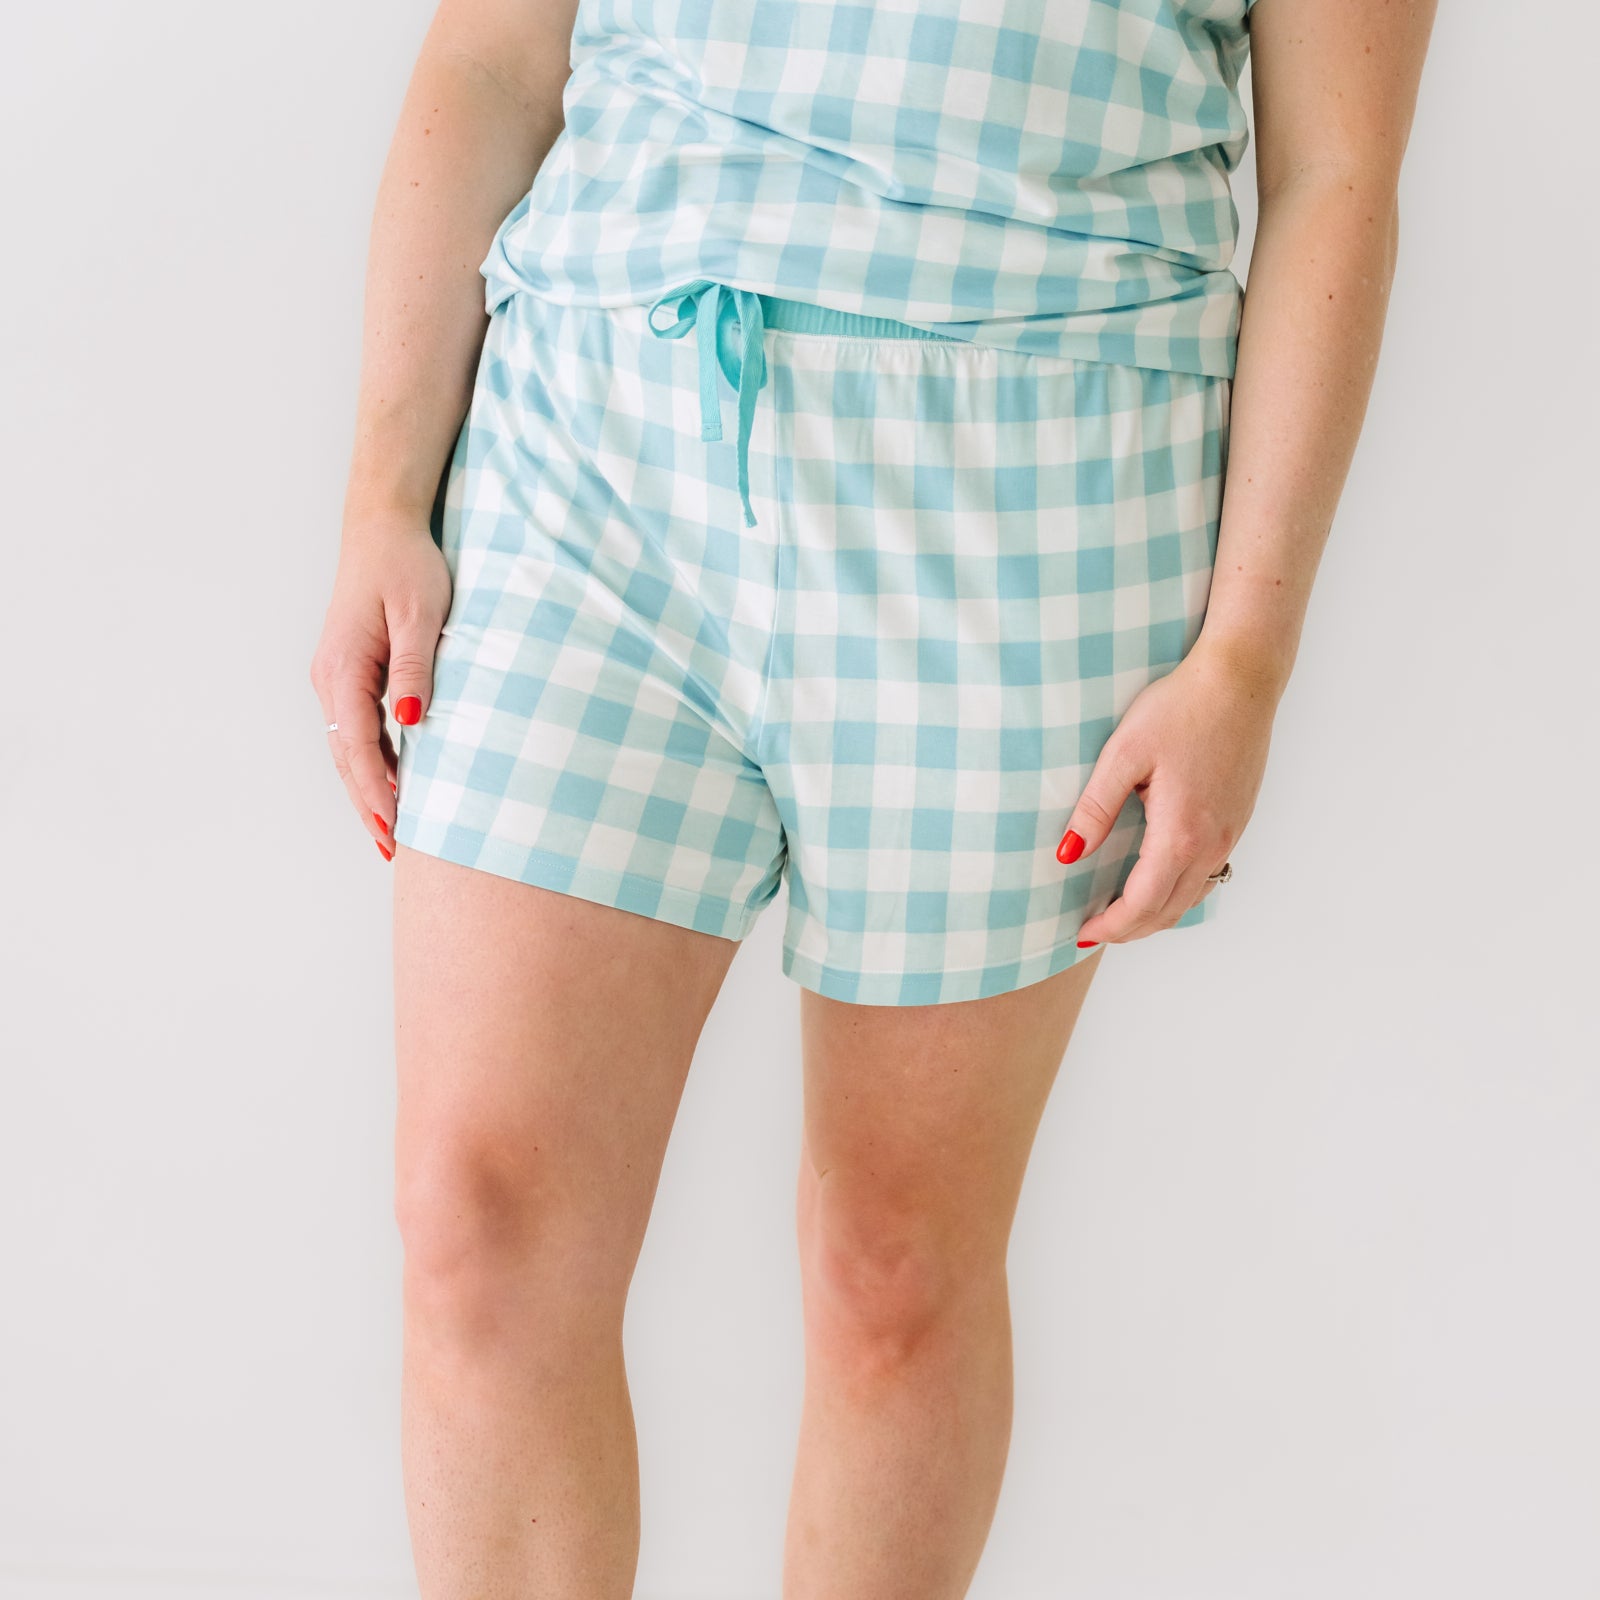 Close up image of a woman wearing Aqua Gingham pajama shorts showing off the drawstring